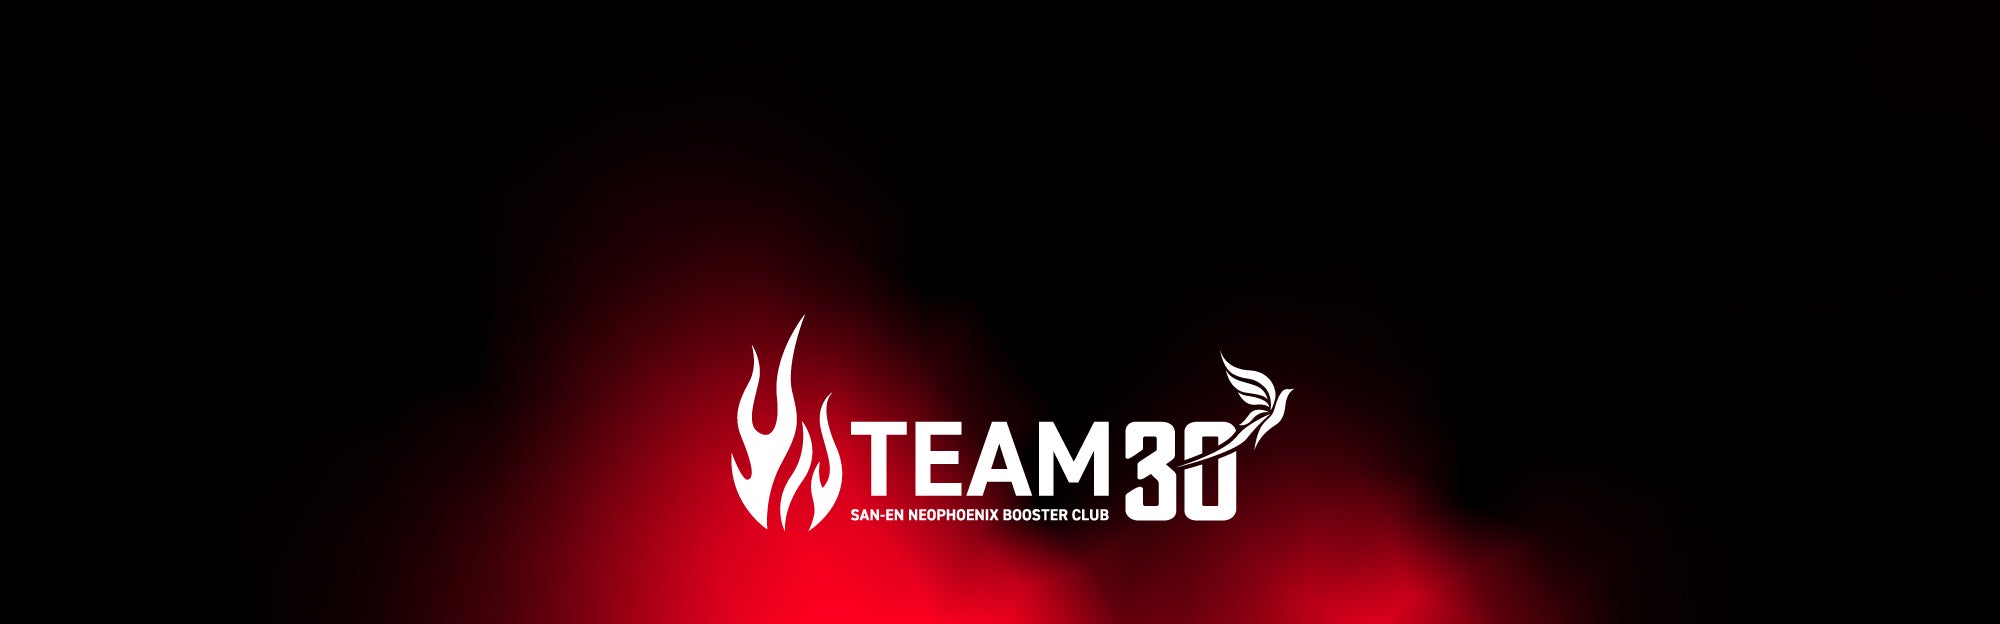 team30 image